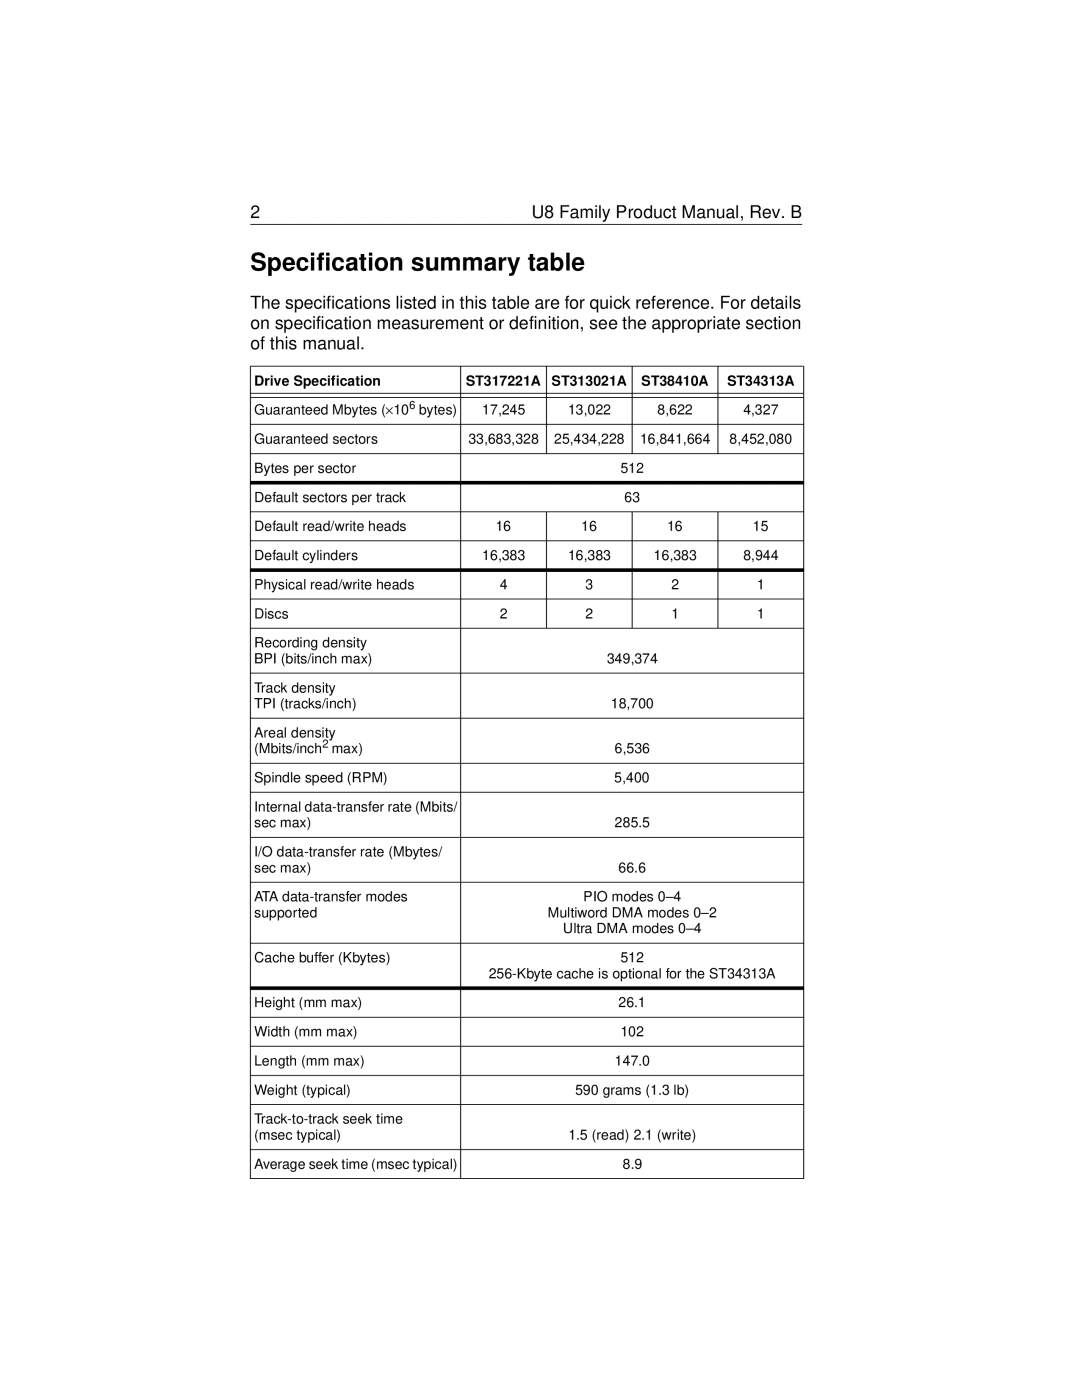 HP 6642D (US), 6671 (LA) manual Specification summary table, Drive Specification, ST317221A, ST313021A, ST38410A, ST34313A 